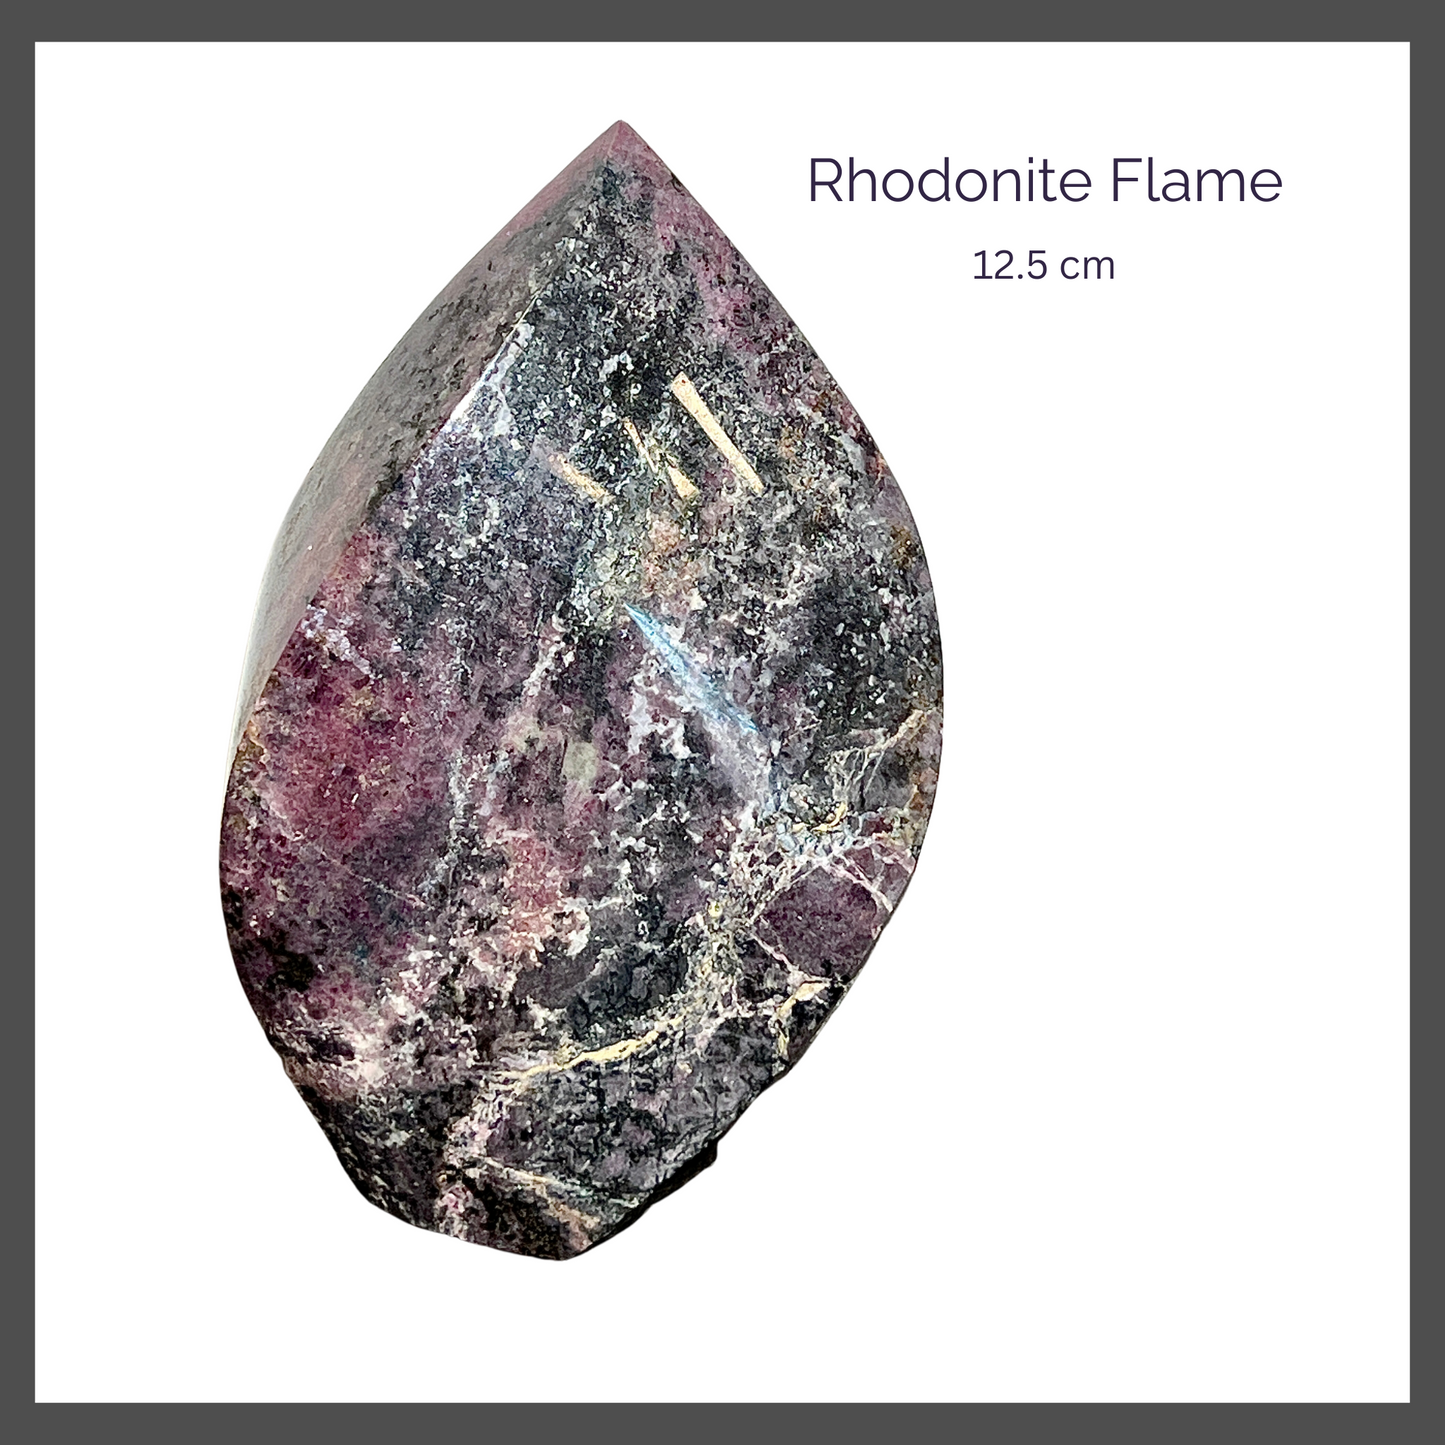 Rhodonite Flame